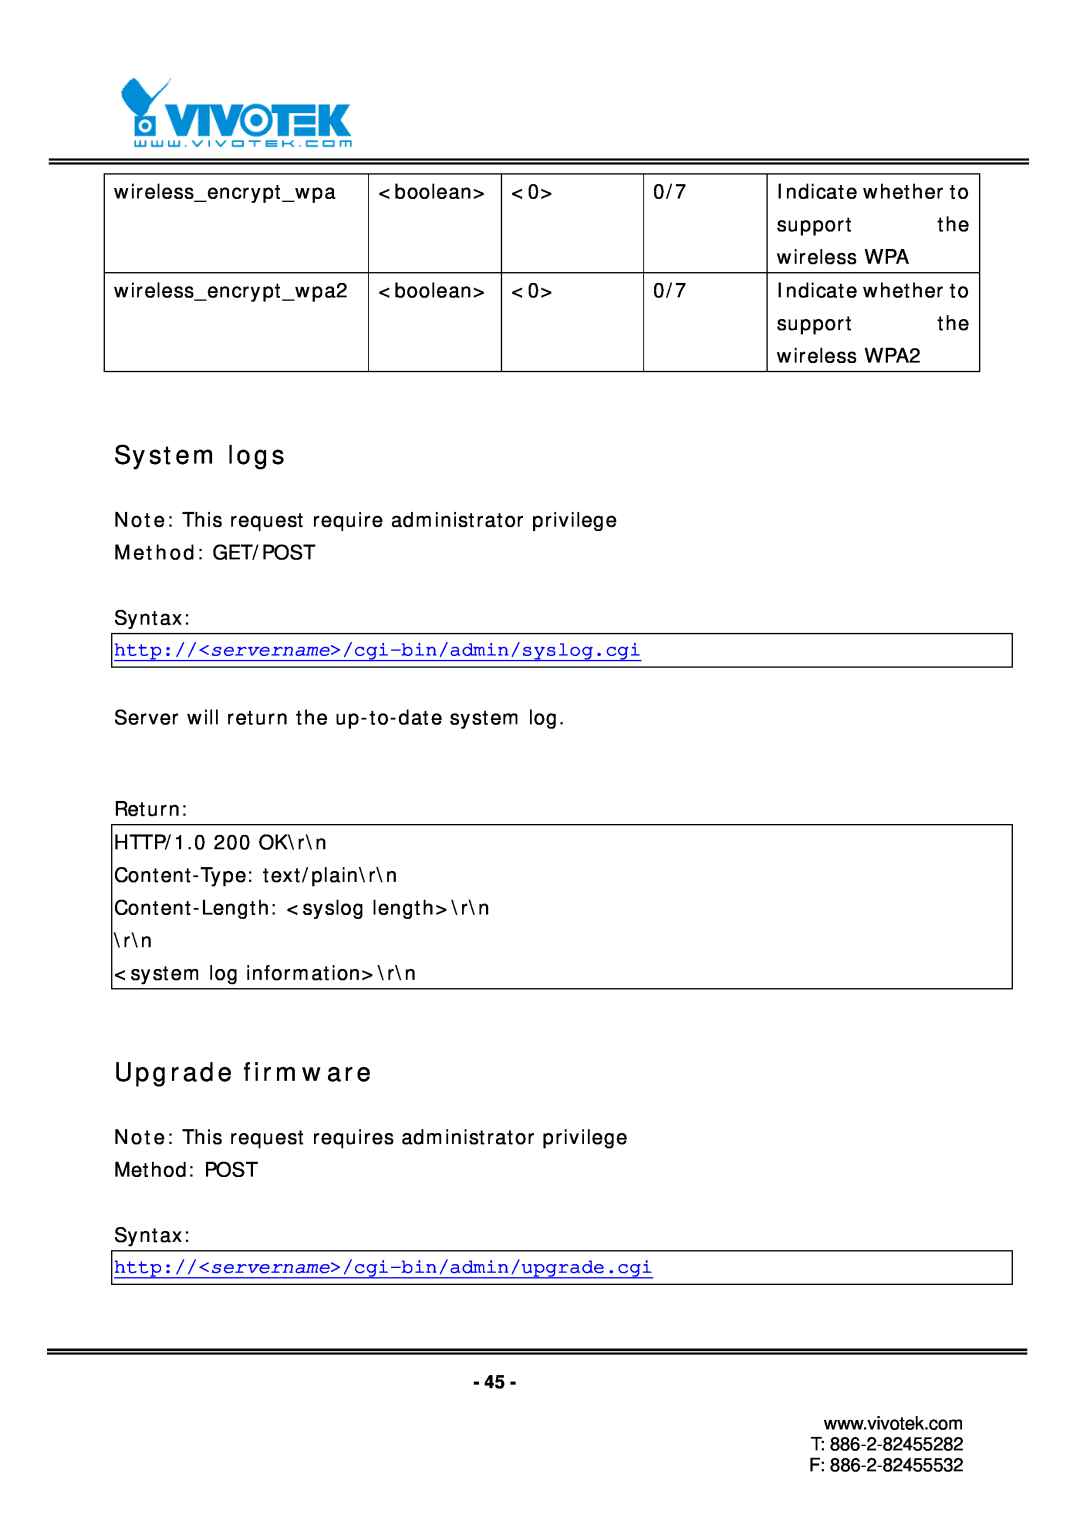 Vivotek RX7101 manual System logs, Upgrade firmware, Method GET/POST 